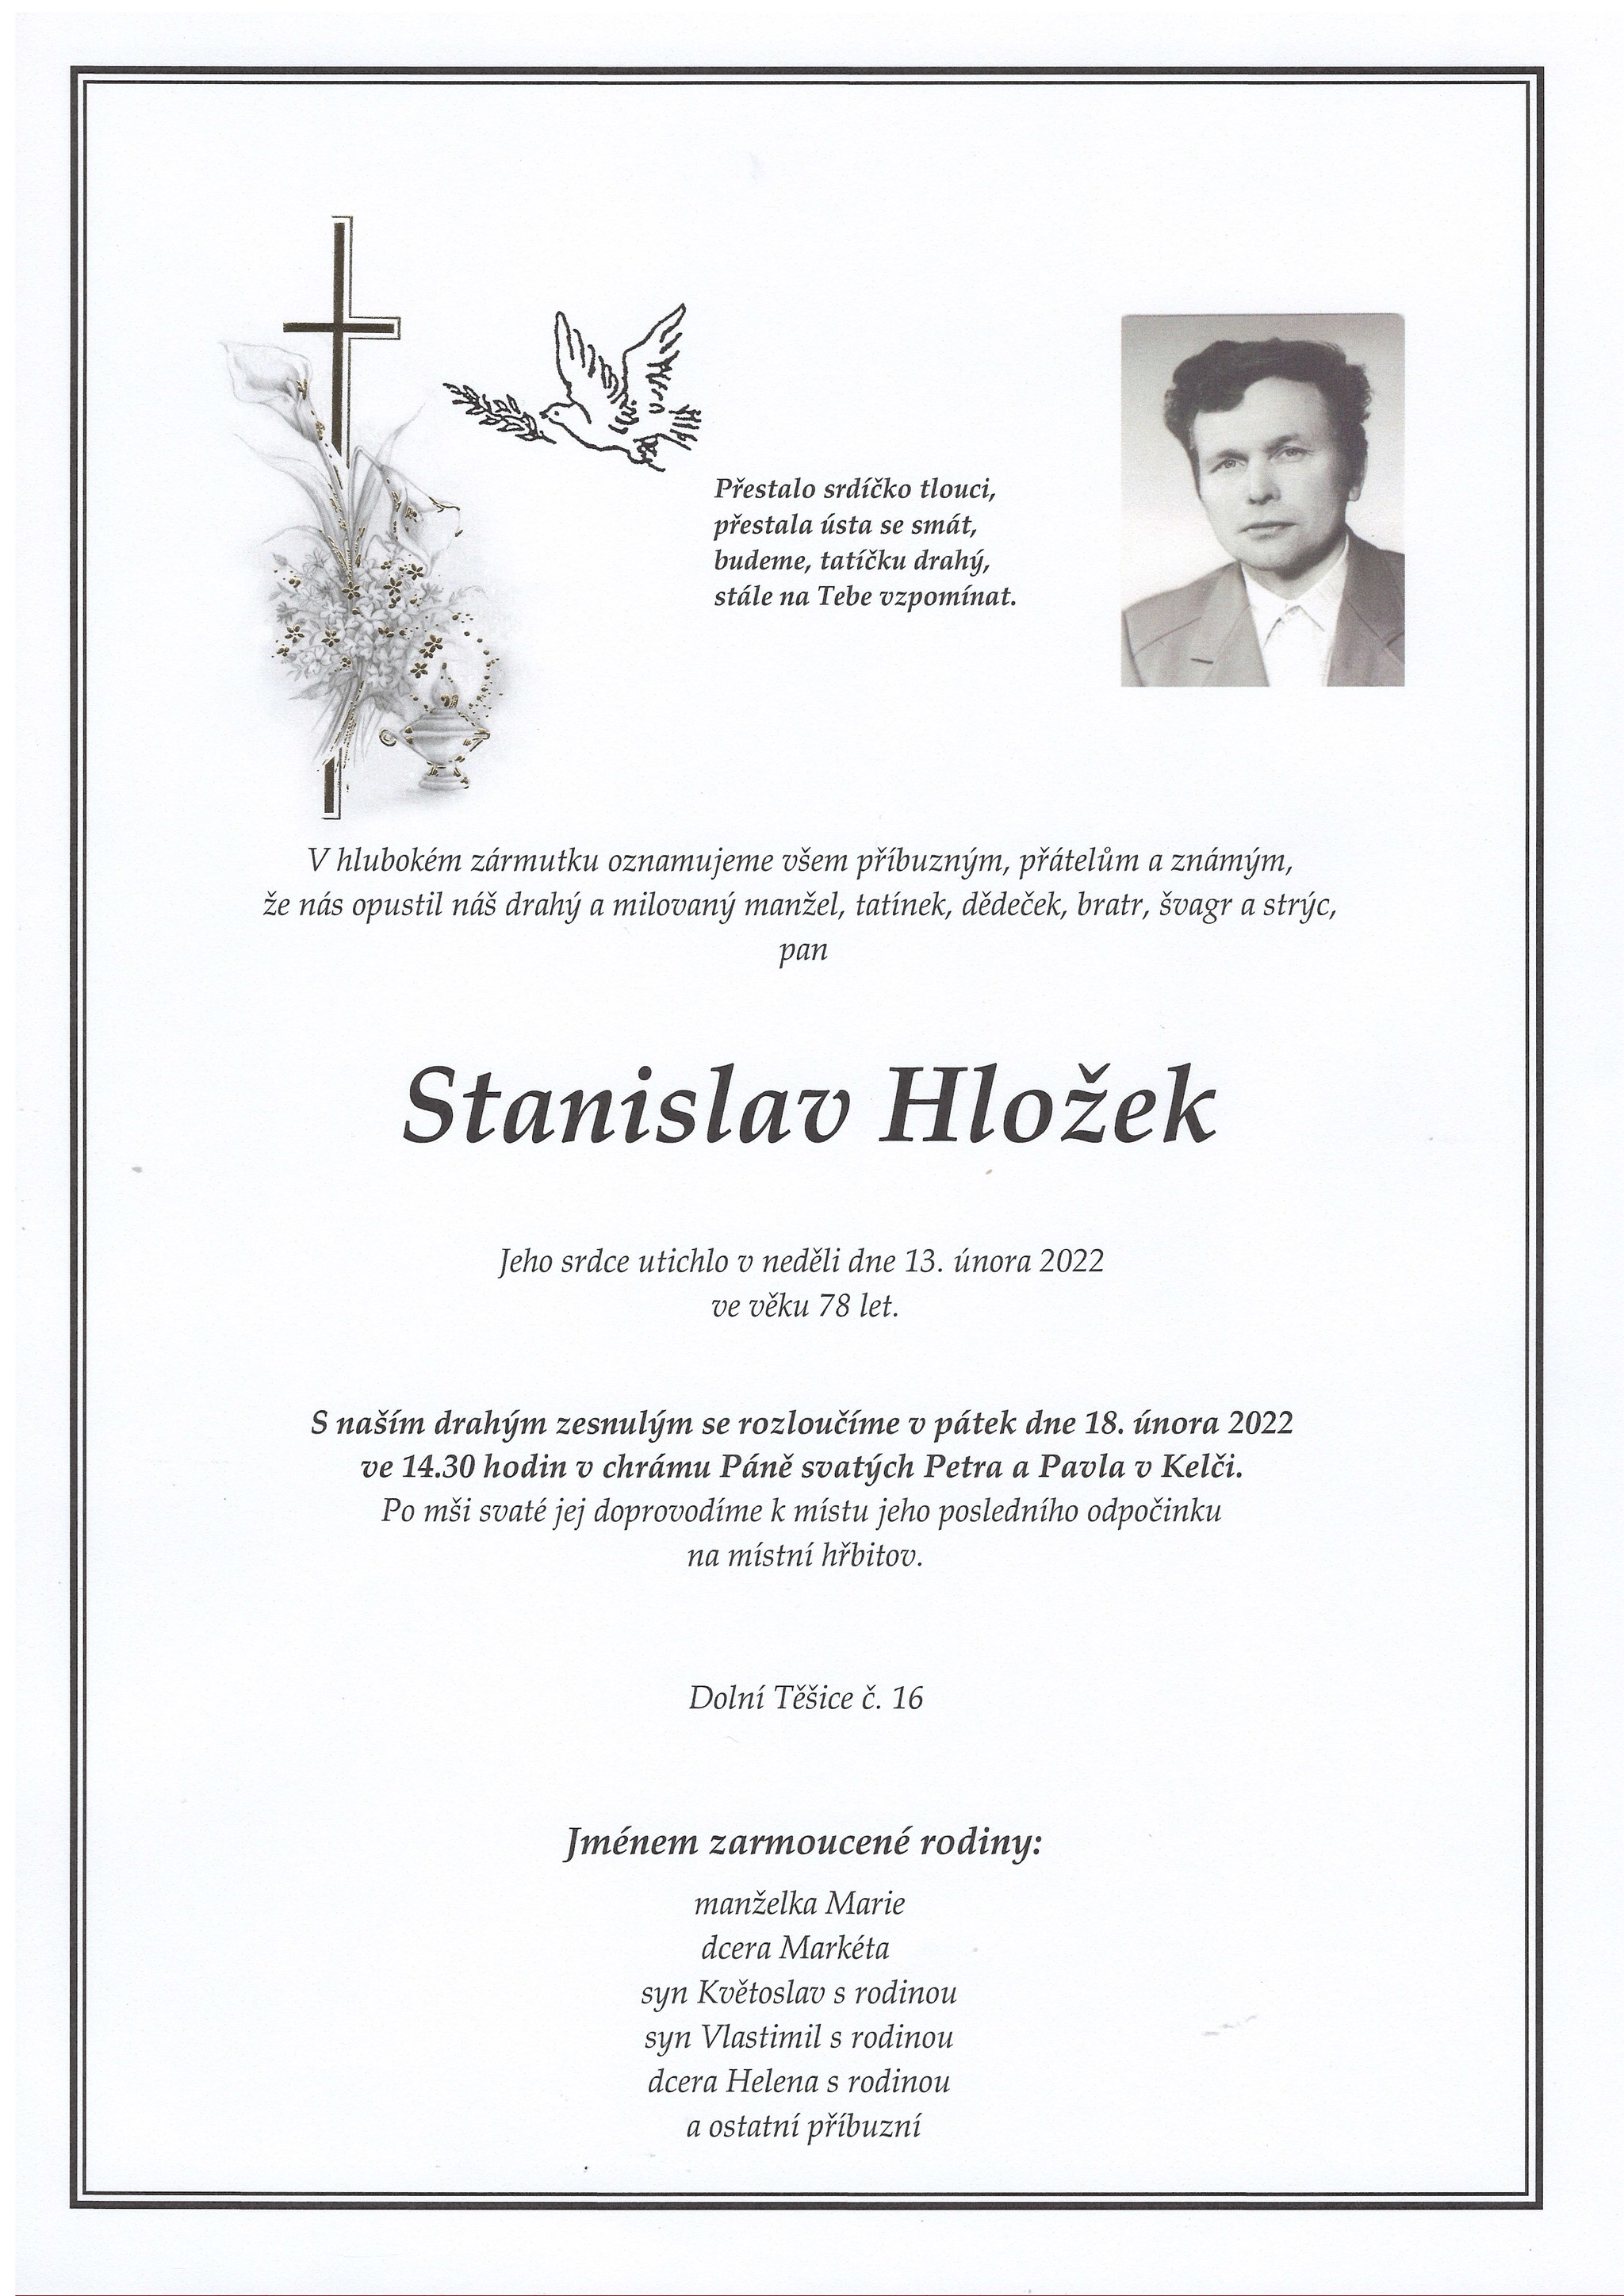 Stanislav Hložek